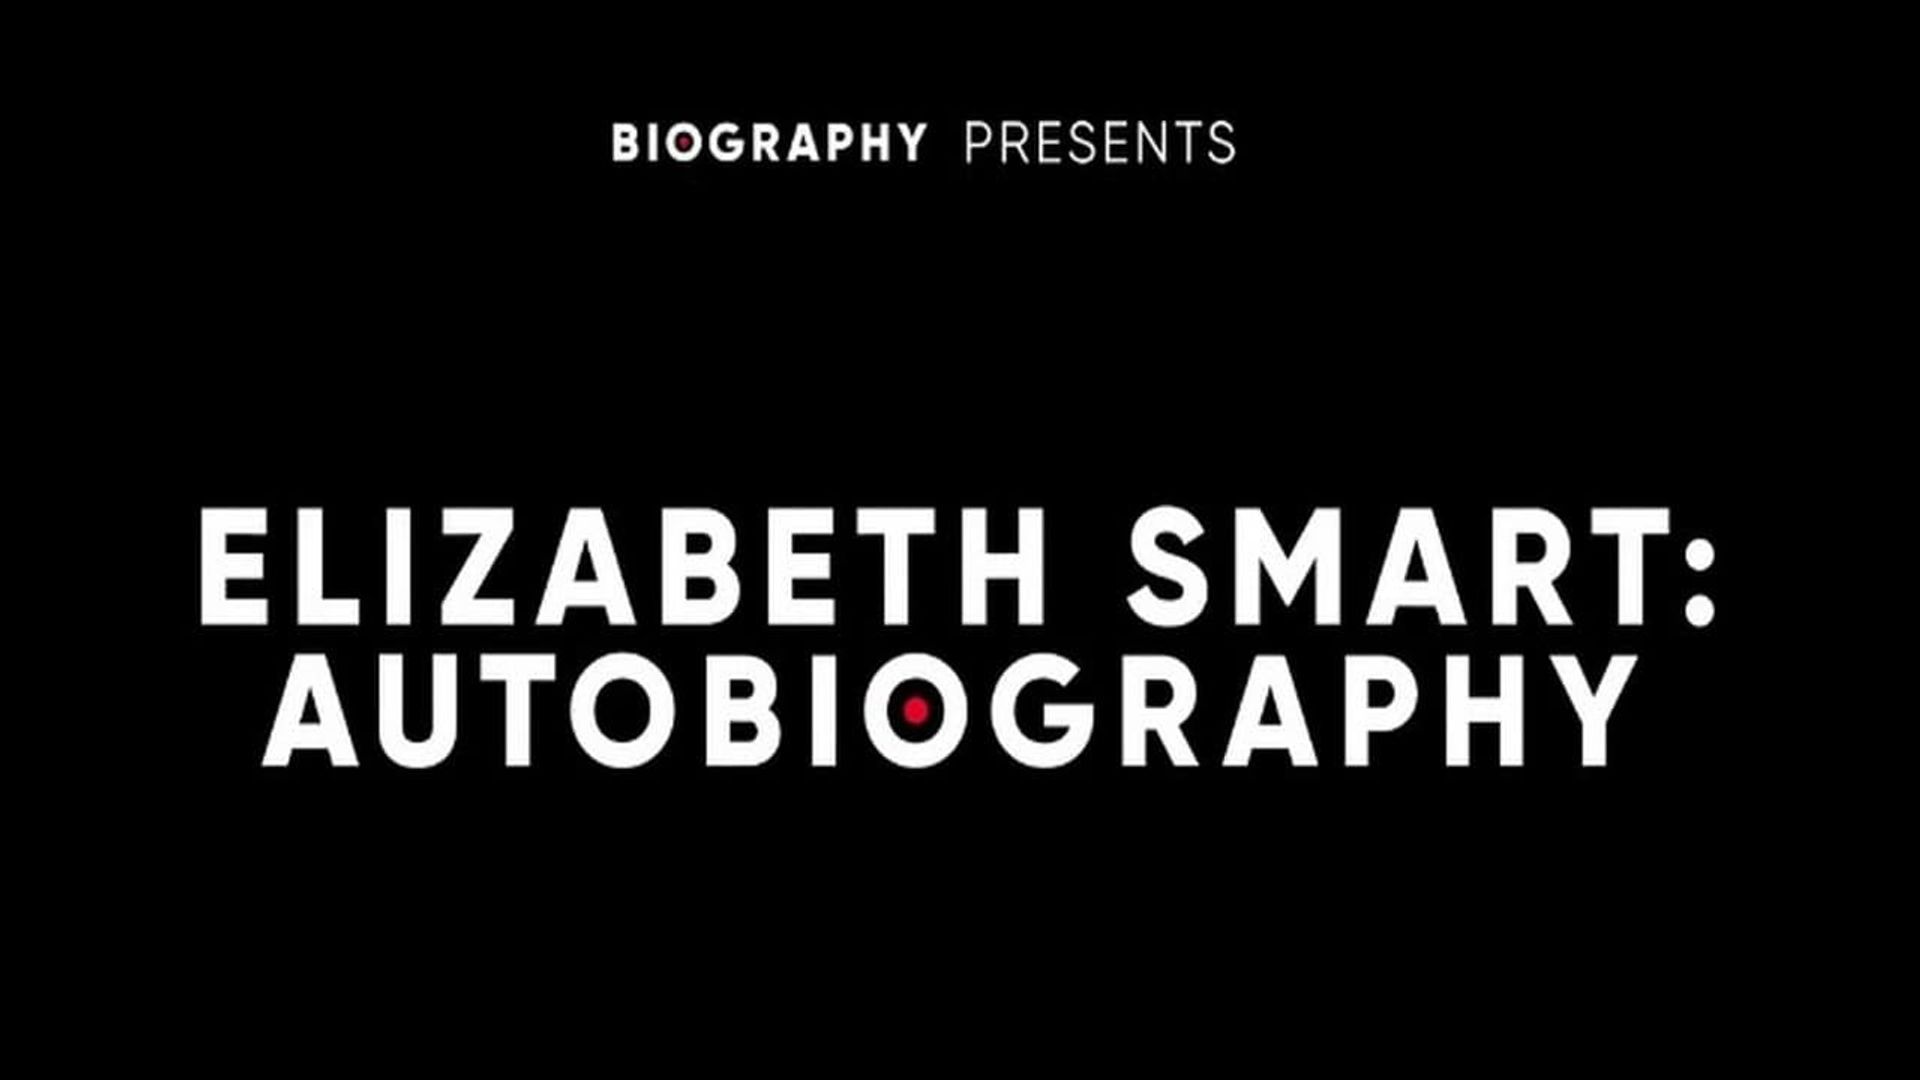 Elizabeth Smart: Autobiography background